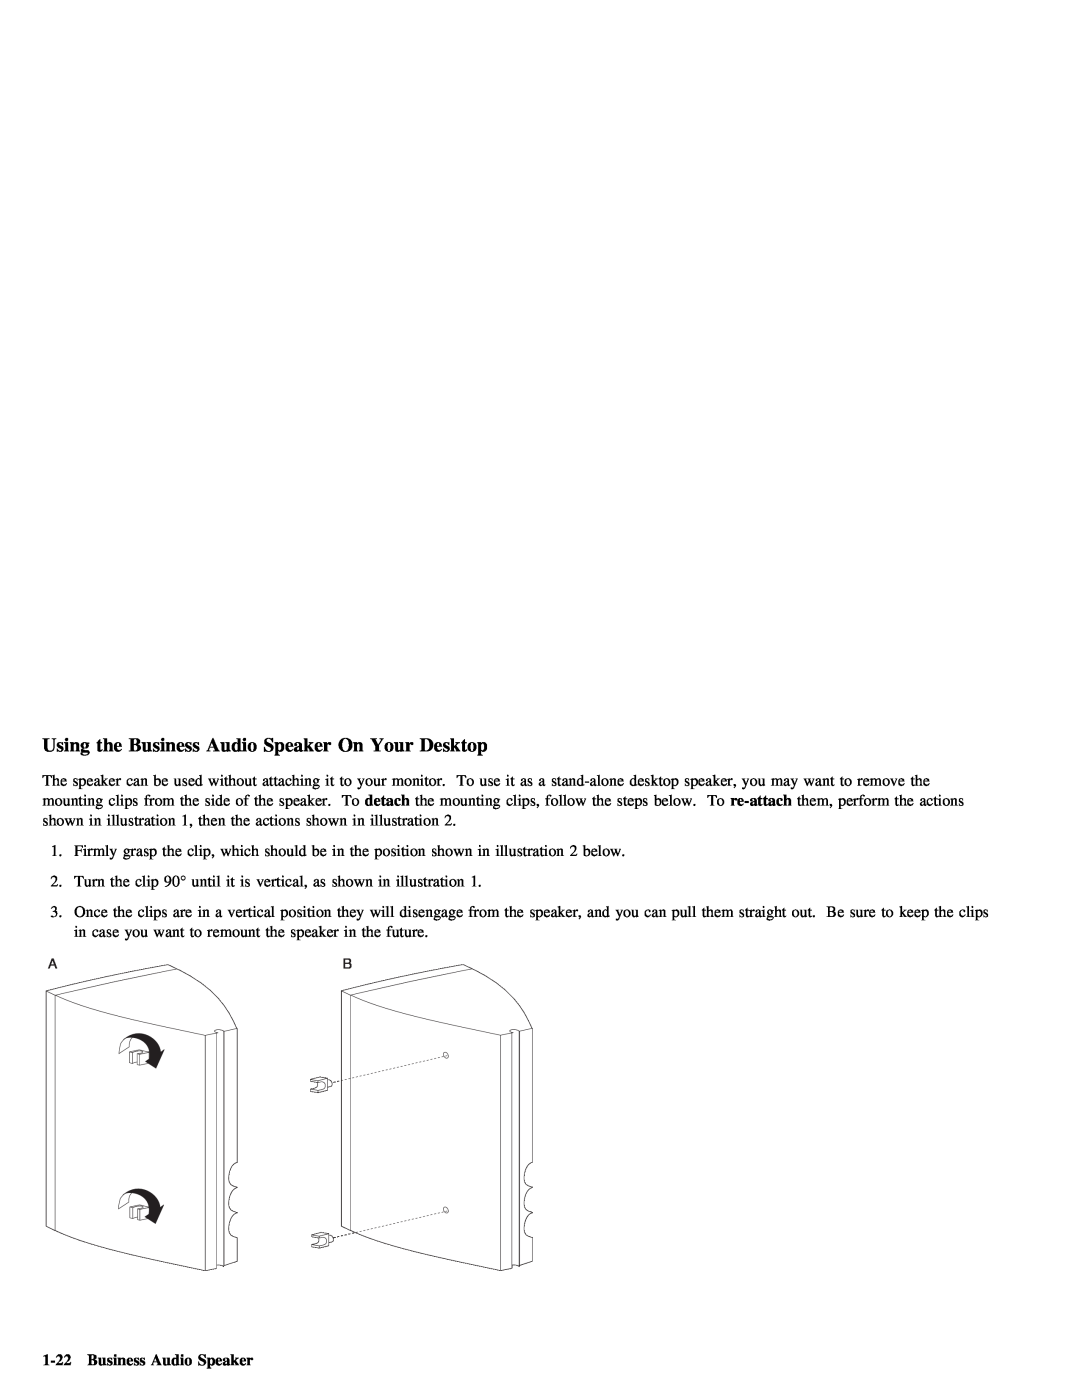 IBM 05L1596 manual 1-22Business Audio Speaker, Your, Using 